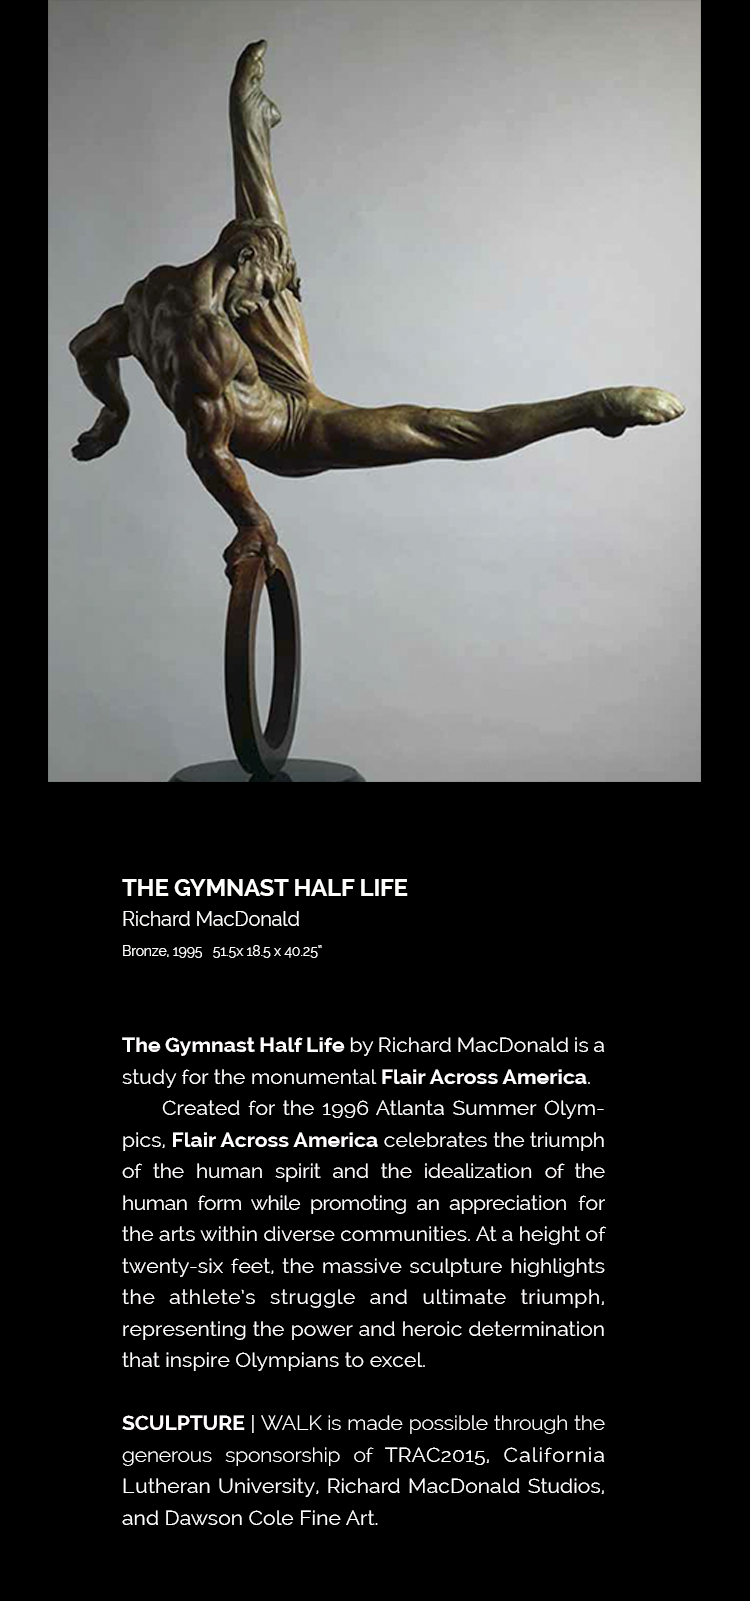 The Gymnast by Richard MacDonald